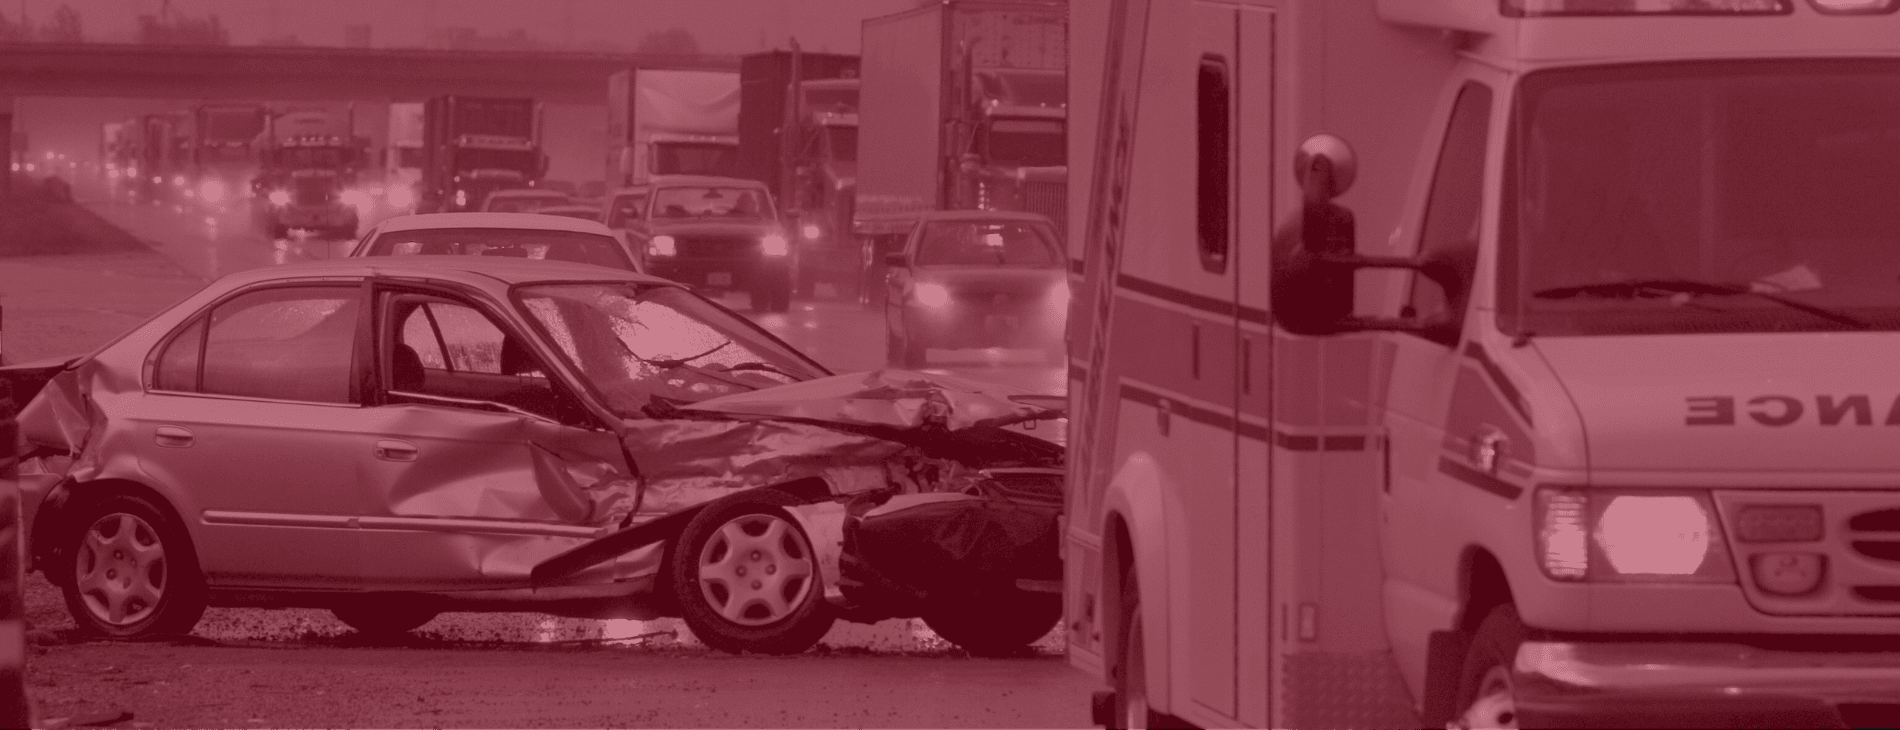 Stockton Car Crash Killed 70-Year-Old Woman After Sideshow (4)